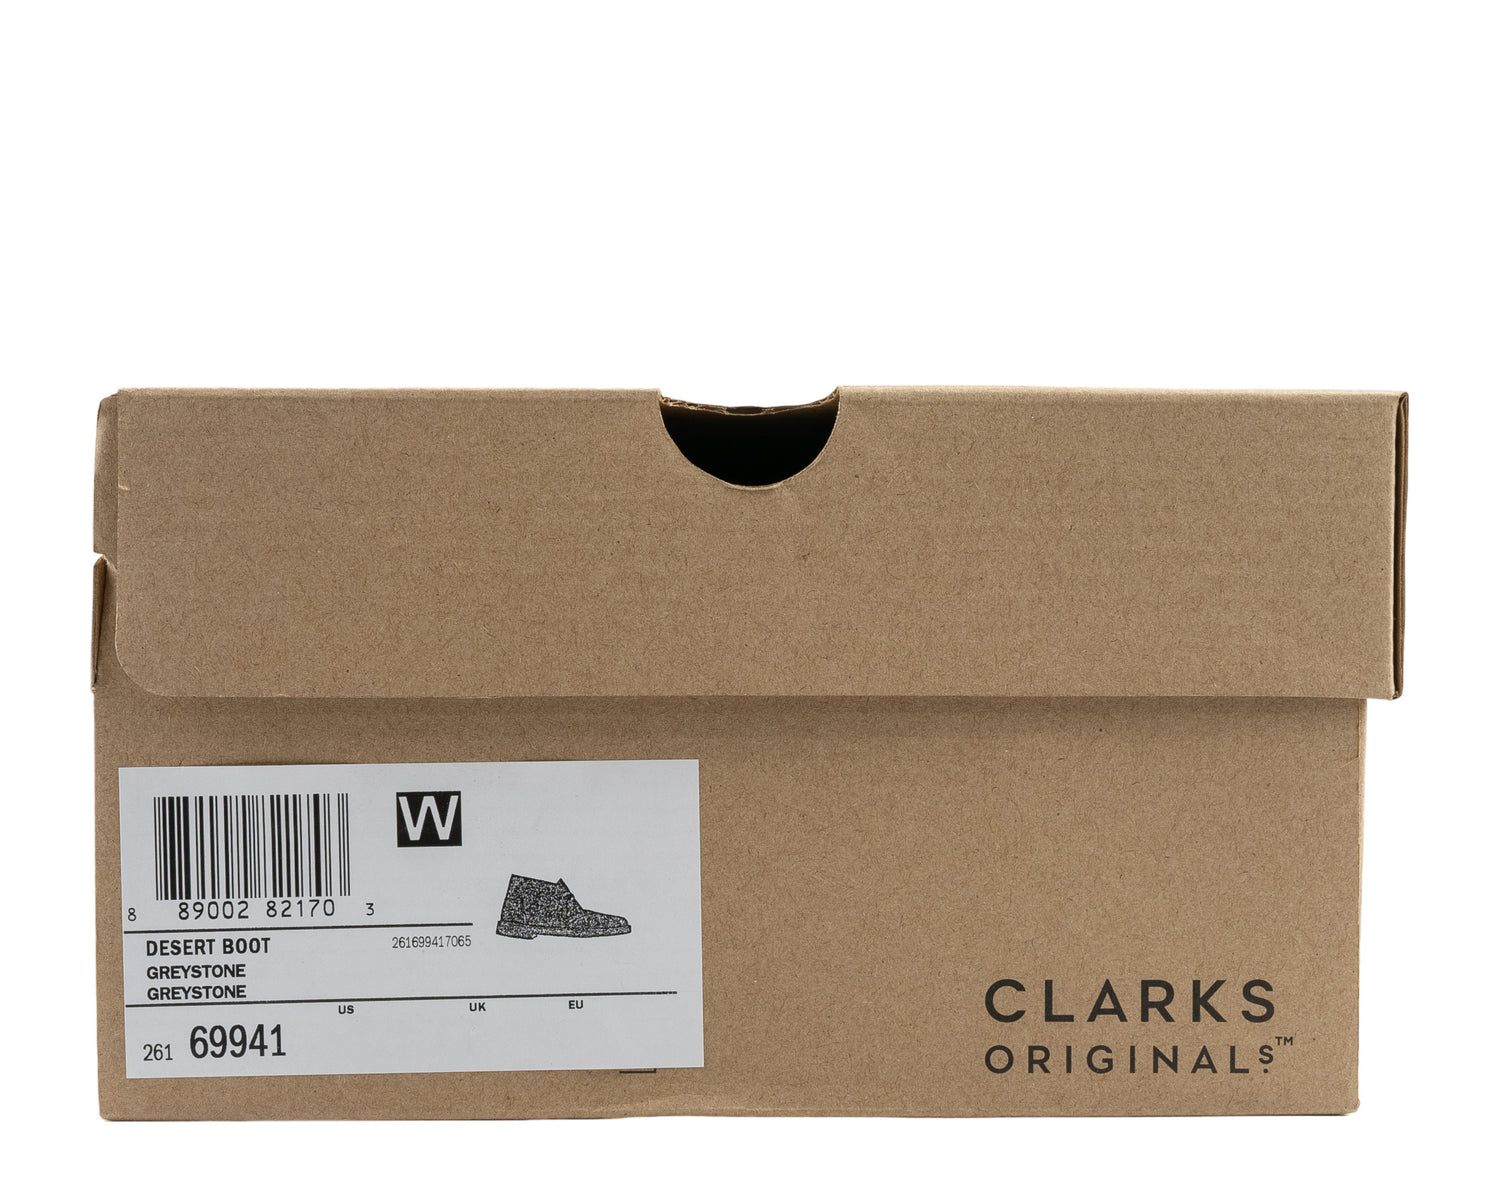 Clarks Originals Desert Boot Men's Casual Chukka Boots